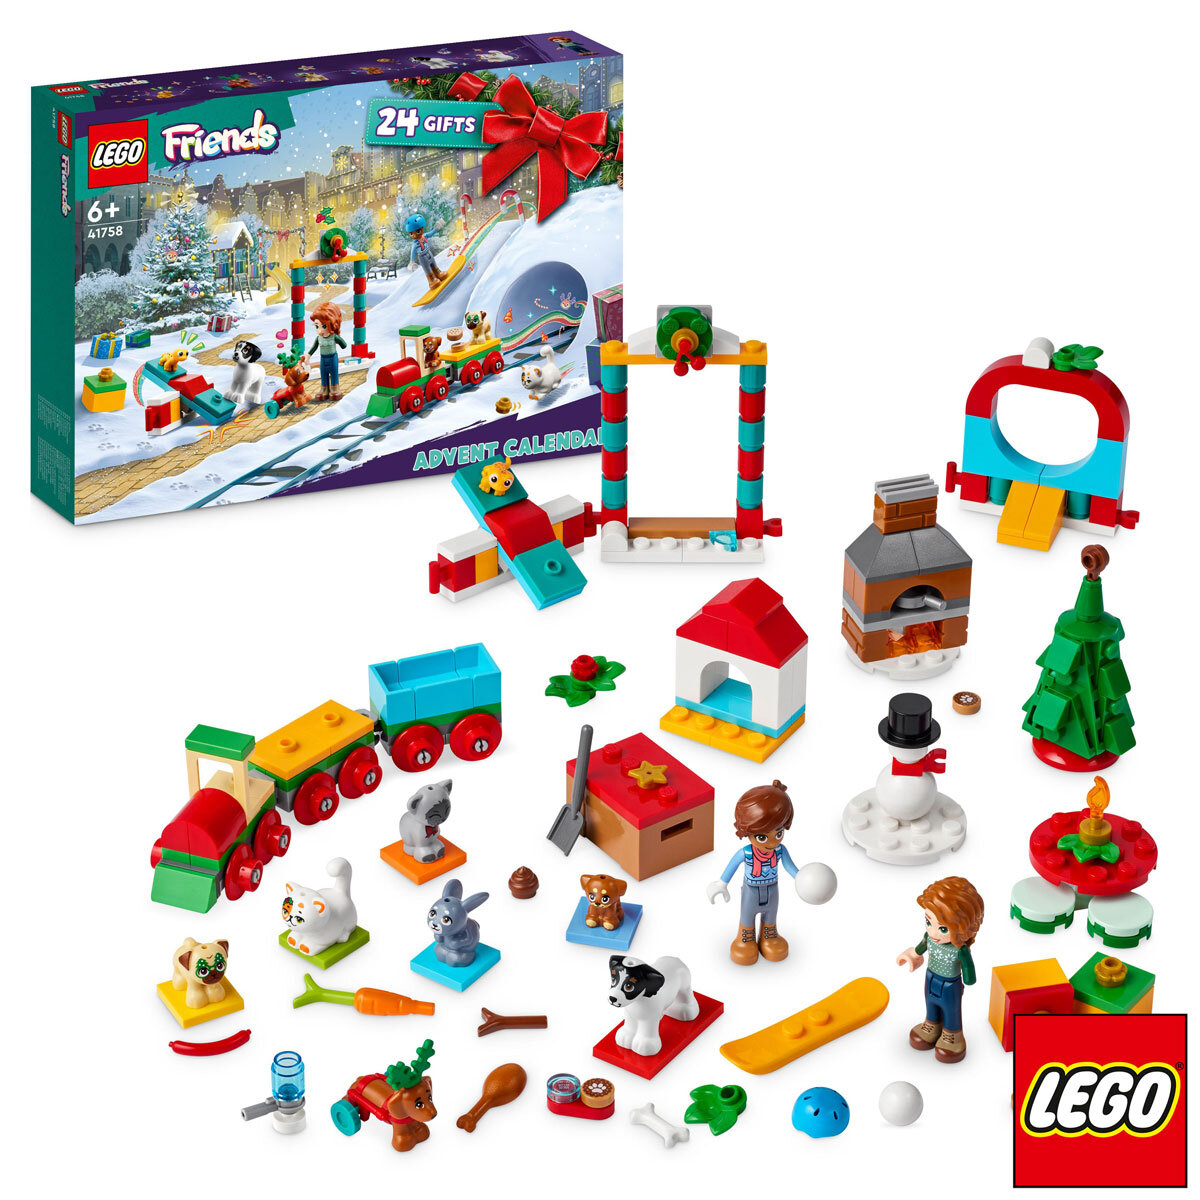 LEGO Friends Advent Calendar Model 41758 (6+ Years) C...